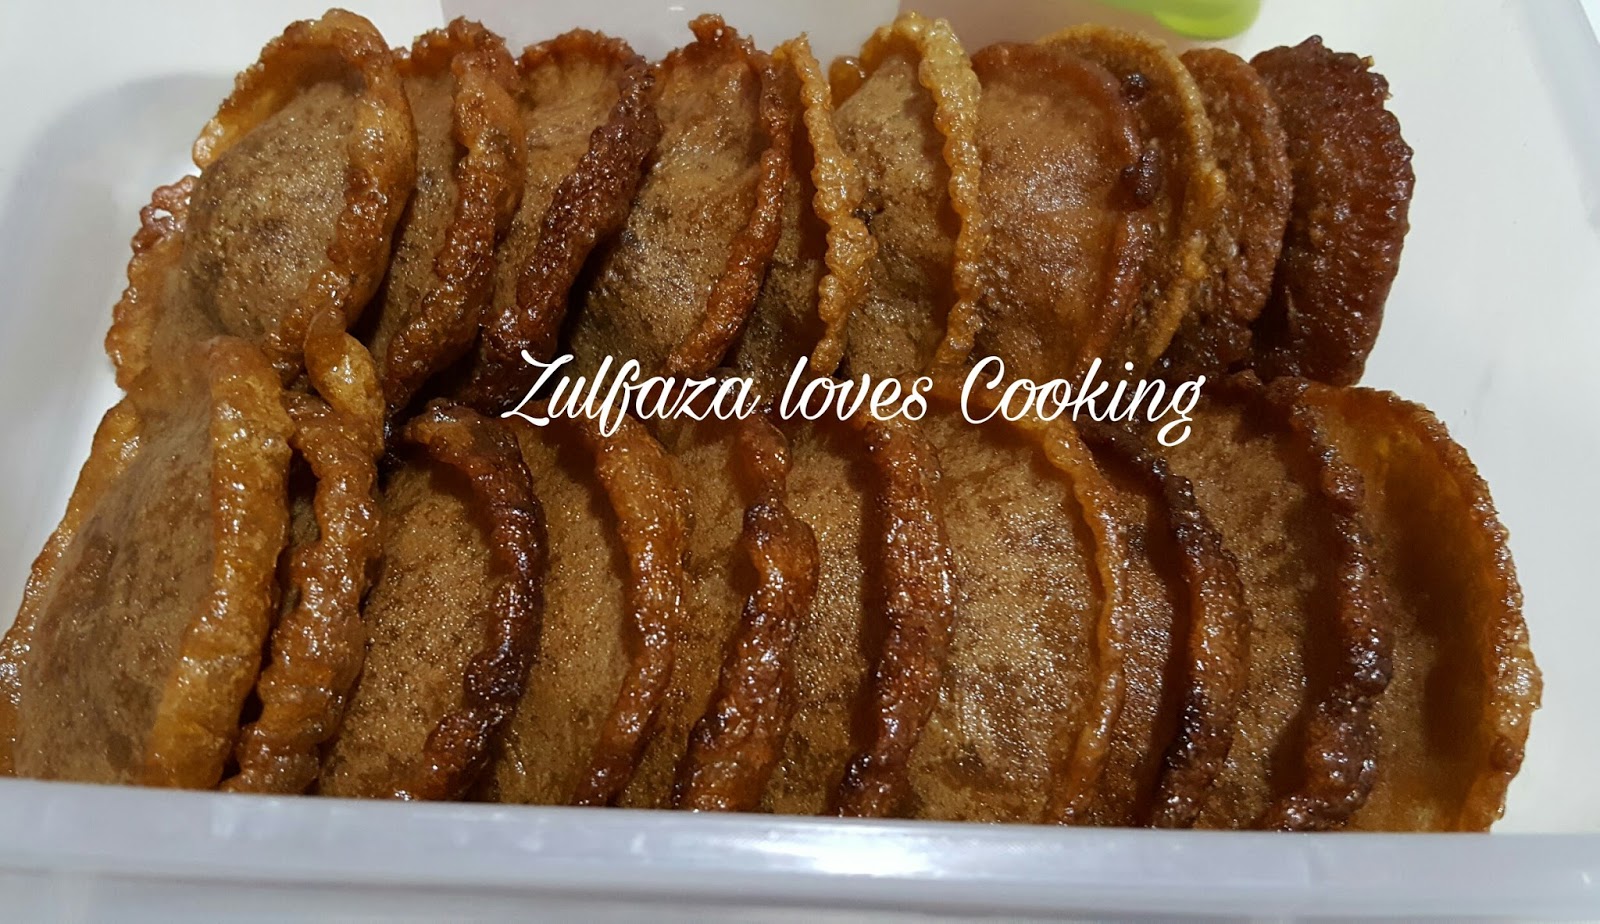 ZULFAZA LOVES COOKING: Kuih cucur penyaram aka cucur jawa 